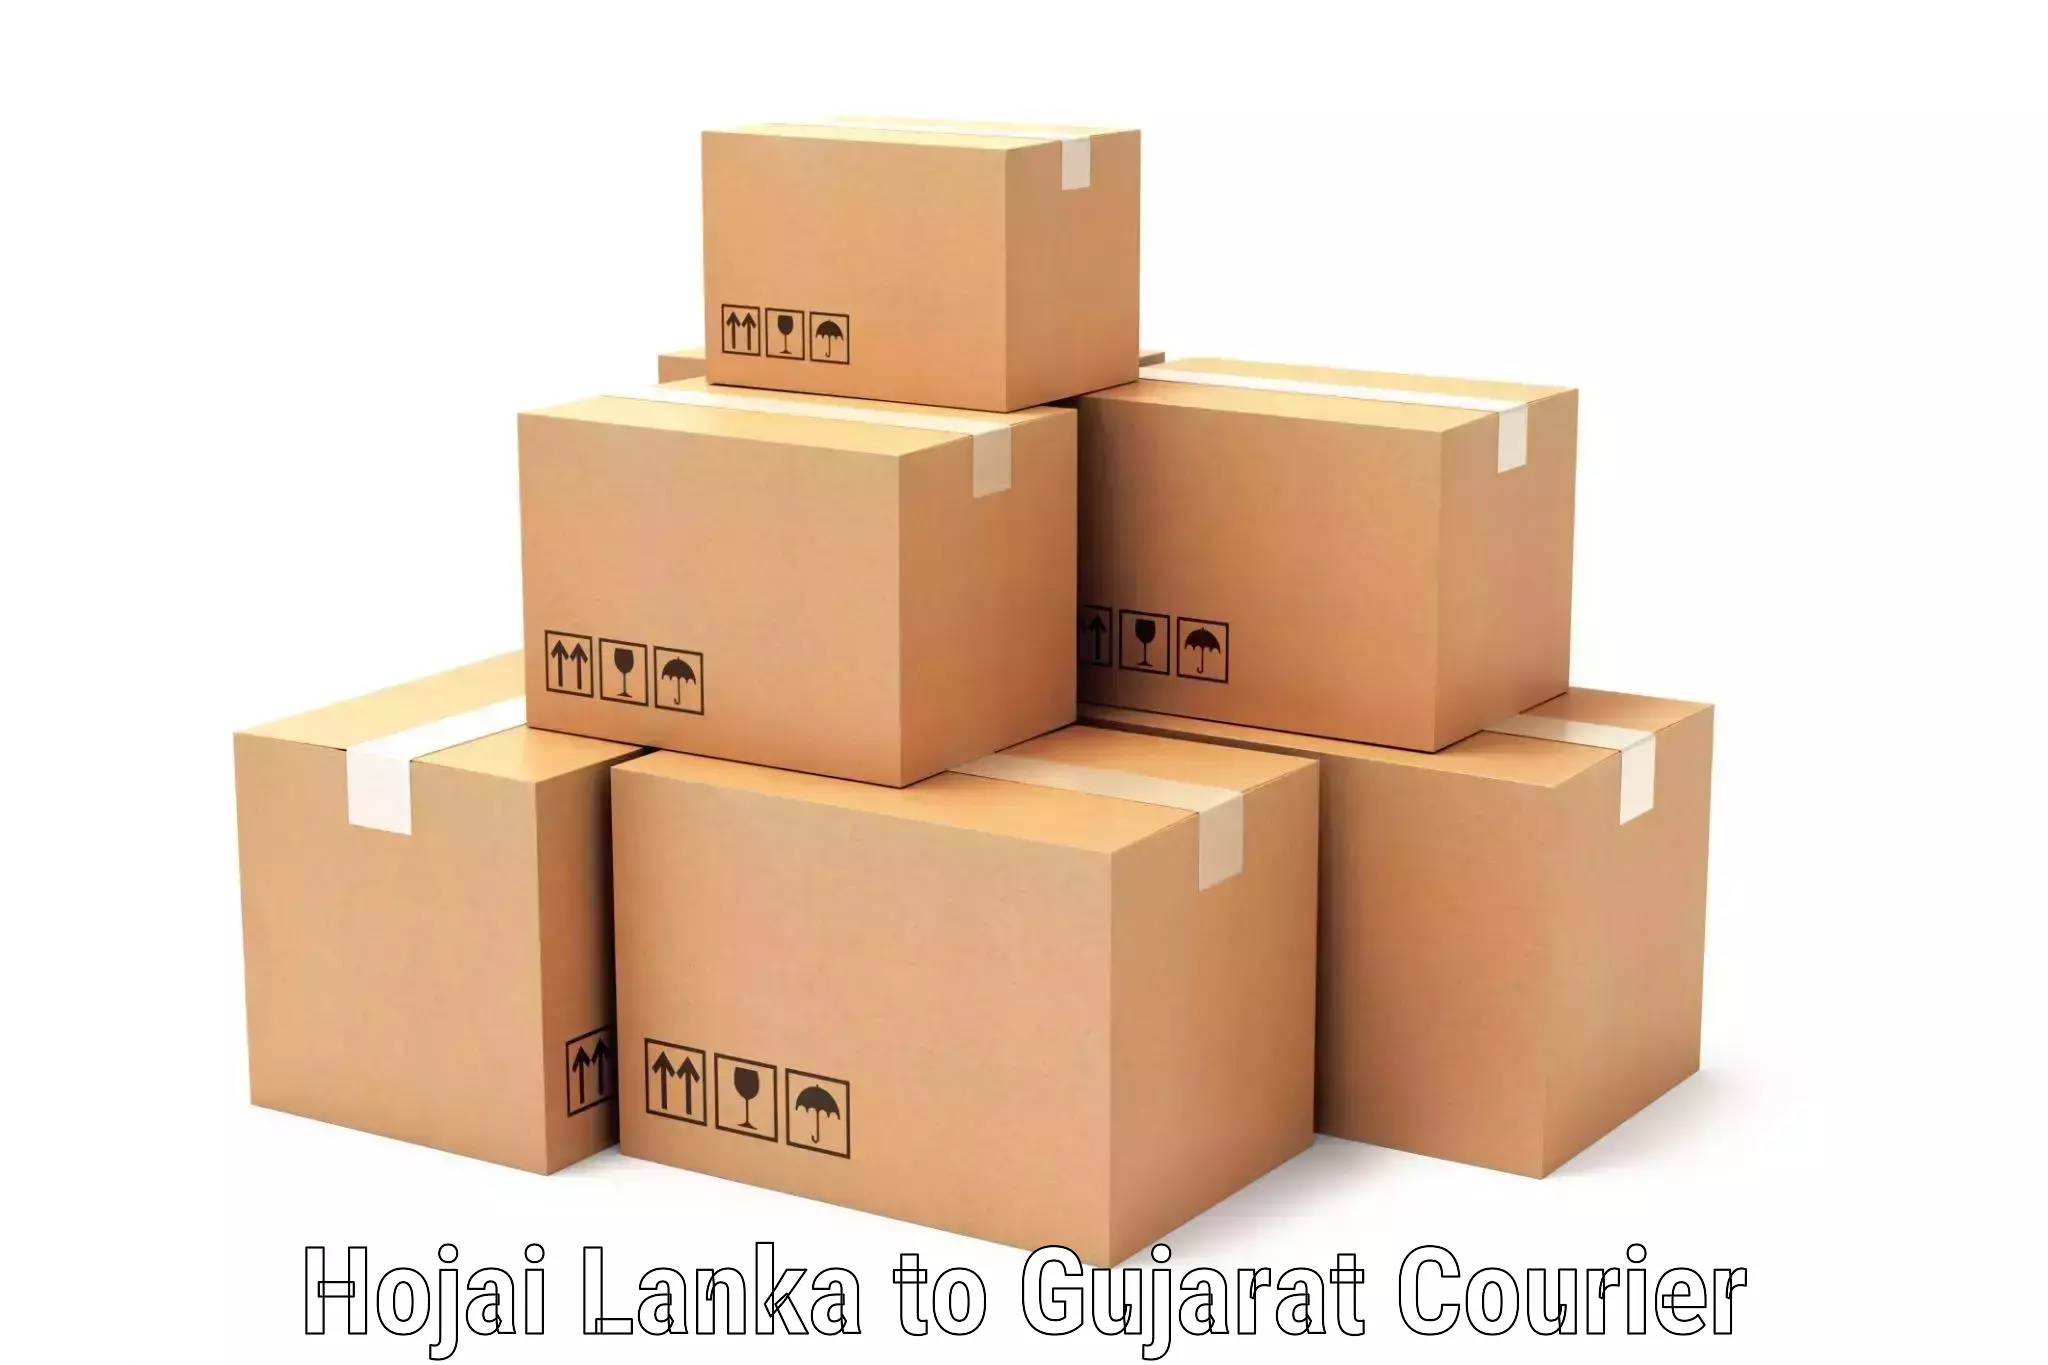 Courier service efficiency Hojai Lanka to Patan